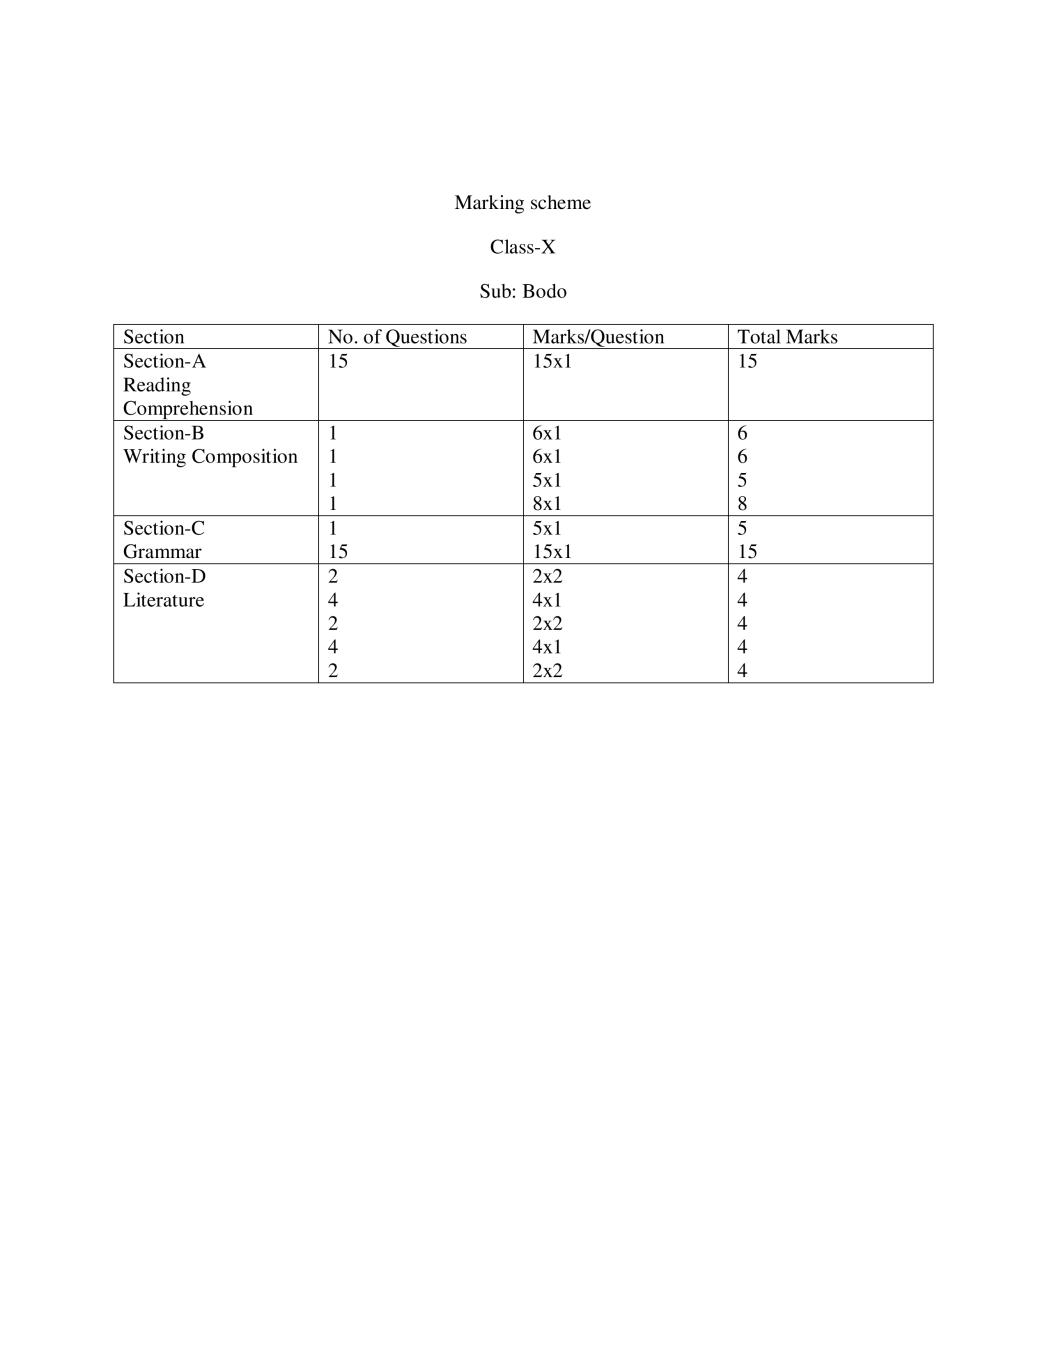 CBSE Class 10 Marking Scheme 2020 for Bodo - Page 1